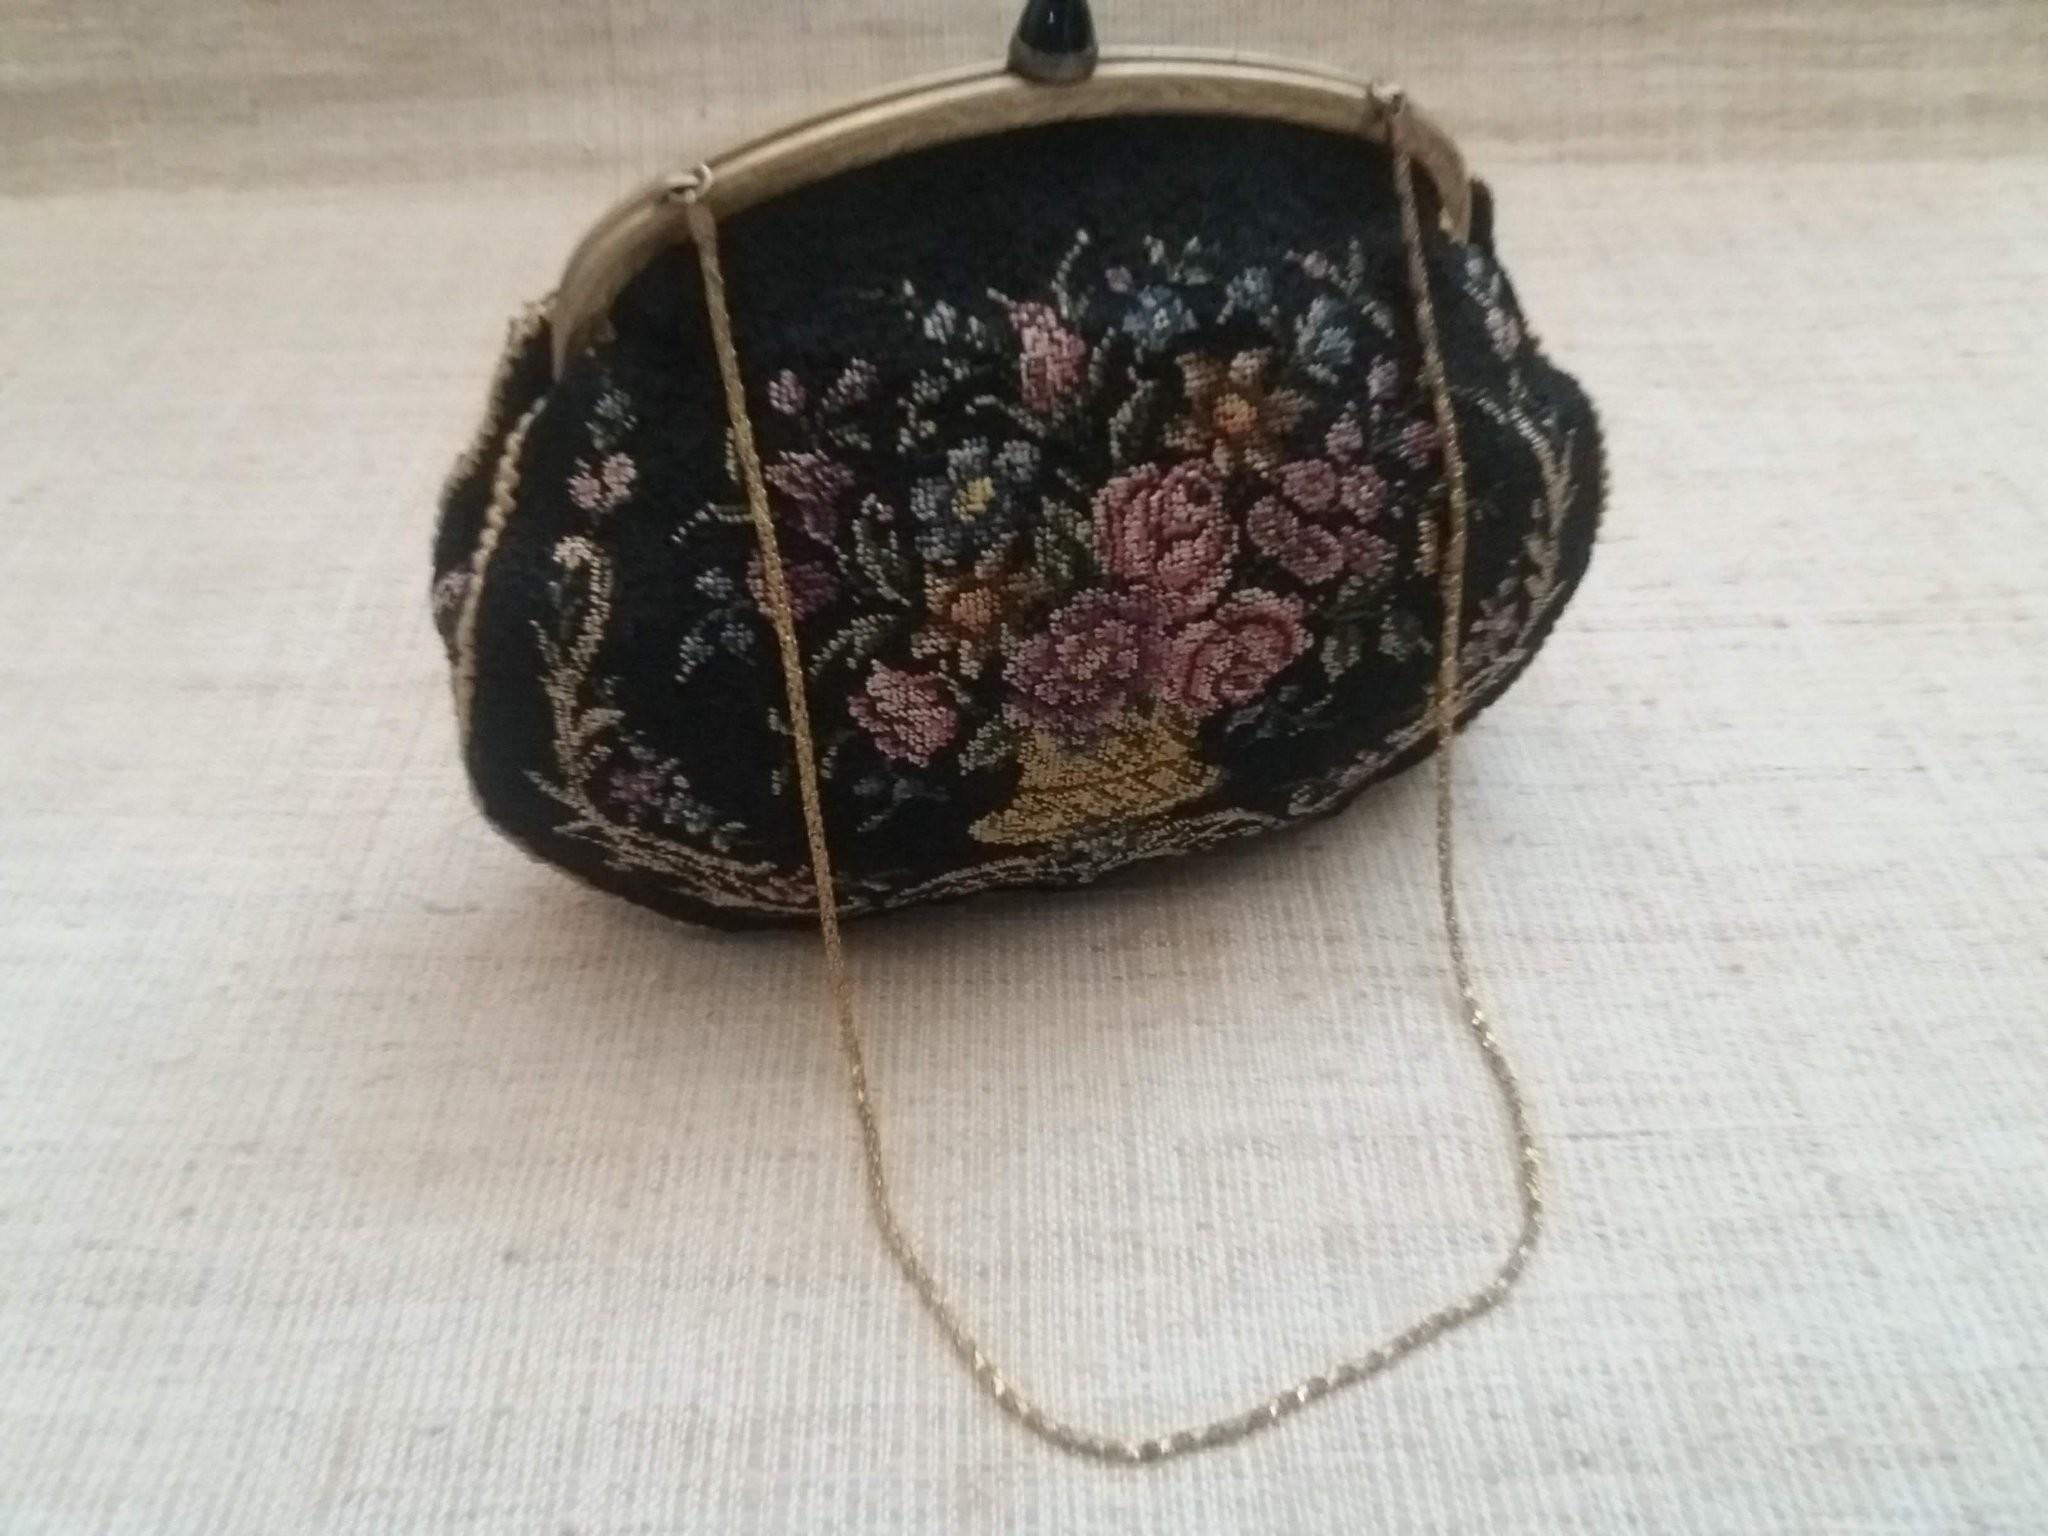 Vintage Gobelin clutch handbag, circa 1930.